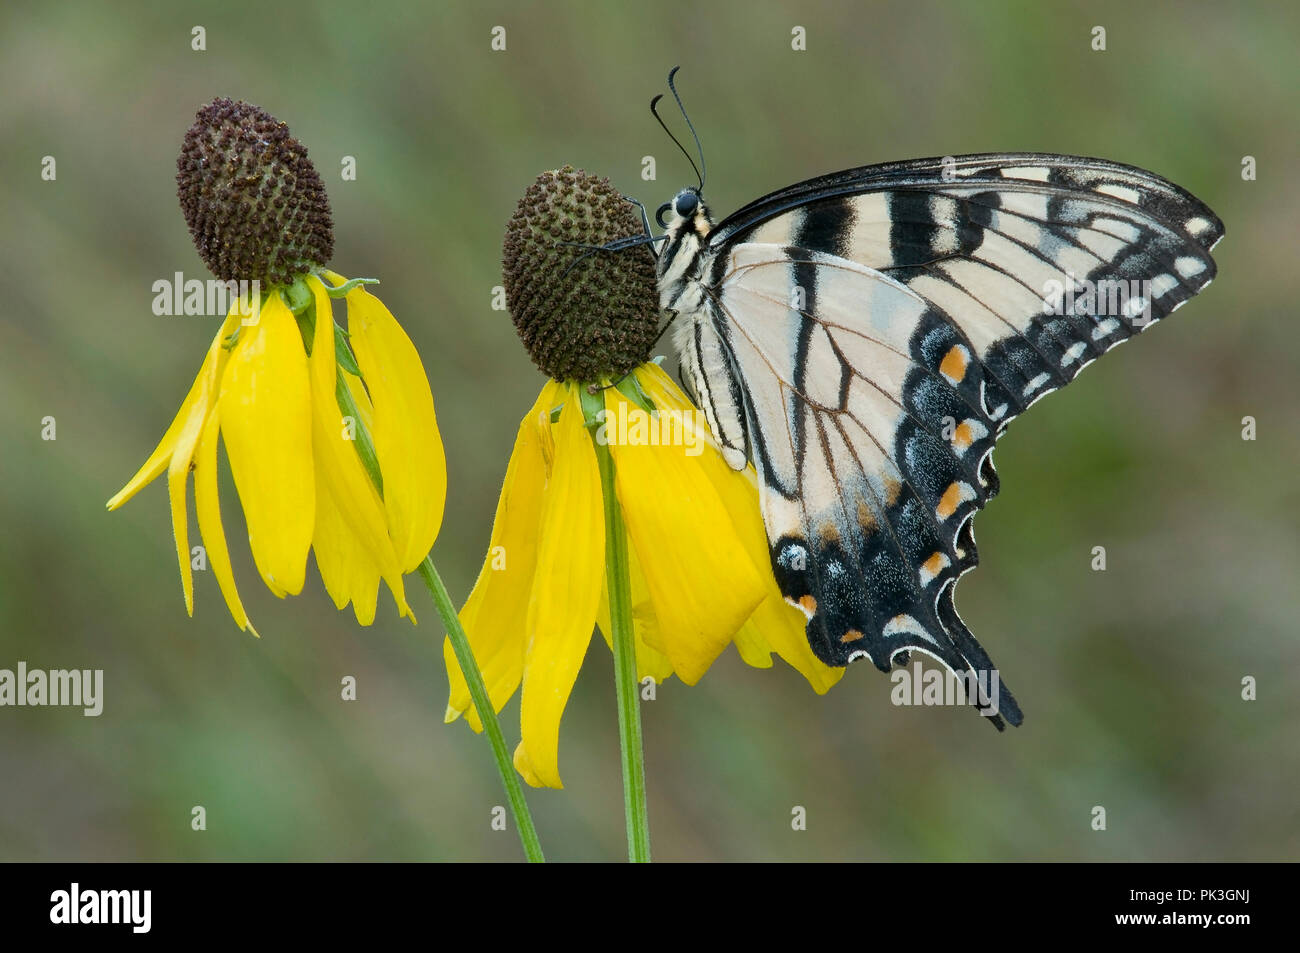 Orientale a coda di rondine di Tiger Butterfly (Papilio glaucus) su a testa grigia (Coneflower Ratibida pinnata), E STATI UNITI D'AMERICA, da saltare Moody/Dembinsky Foto Assoc Foto Stock